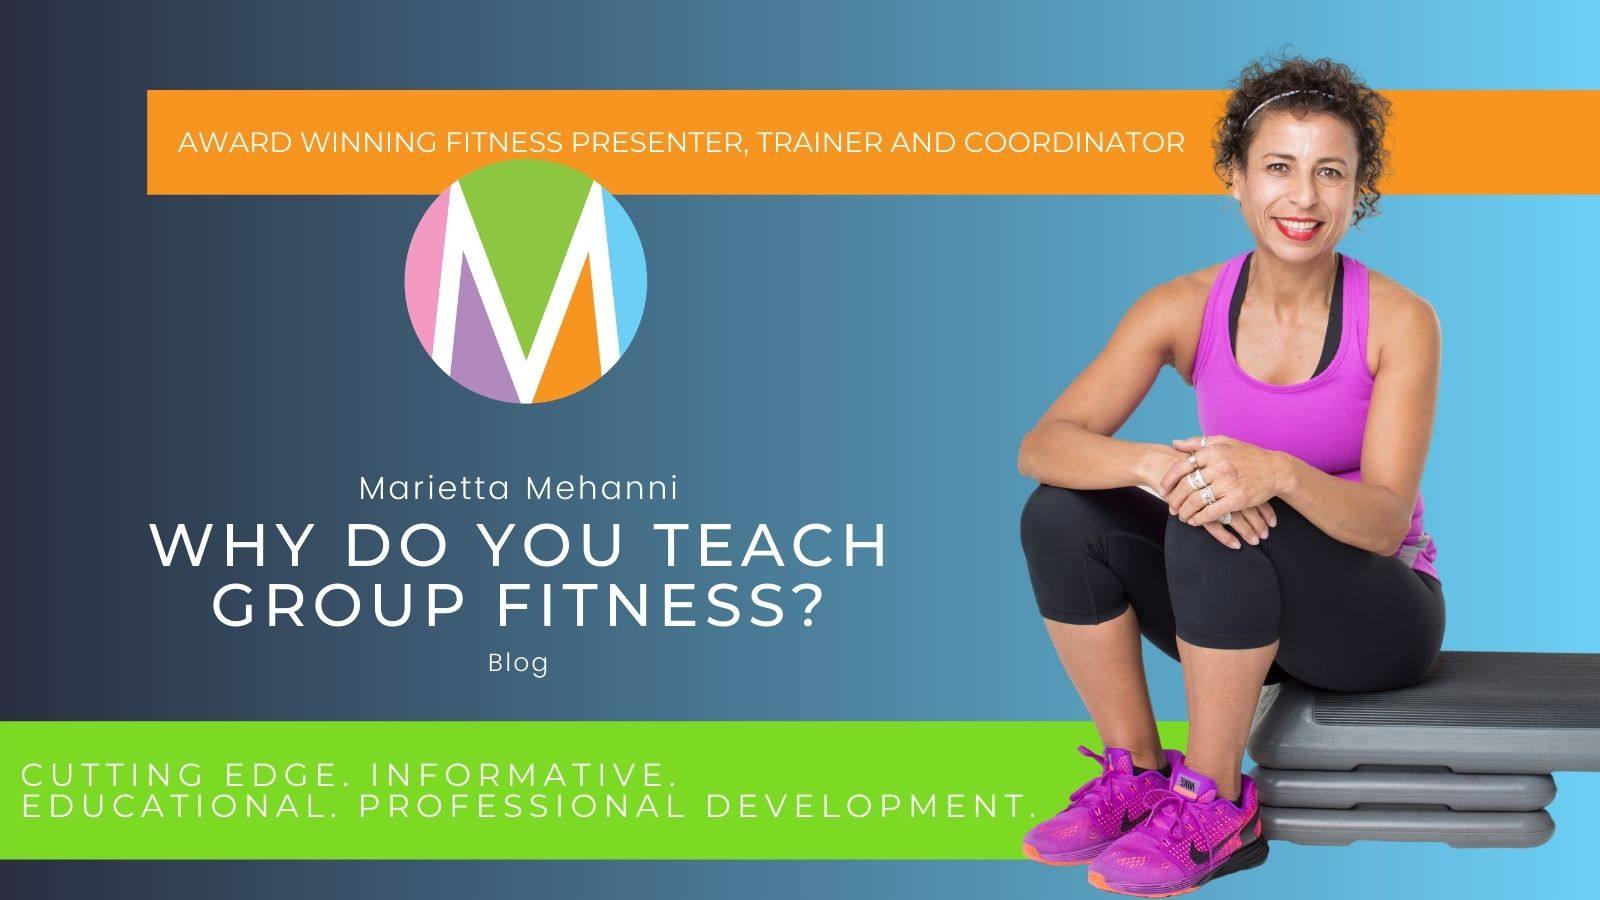 blog why do you teach group fitness marietta mehanni education professional development group fitness personal training informative fitness guru presenter